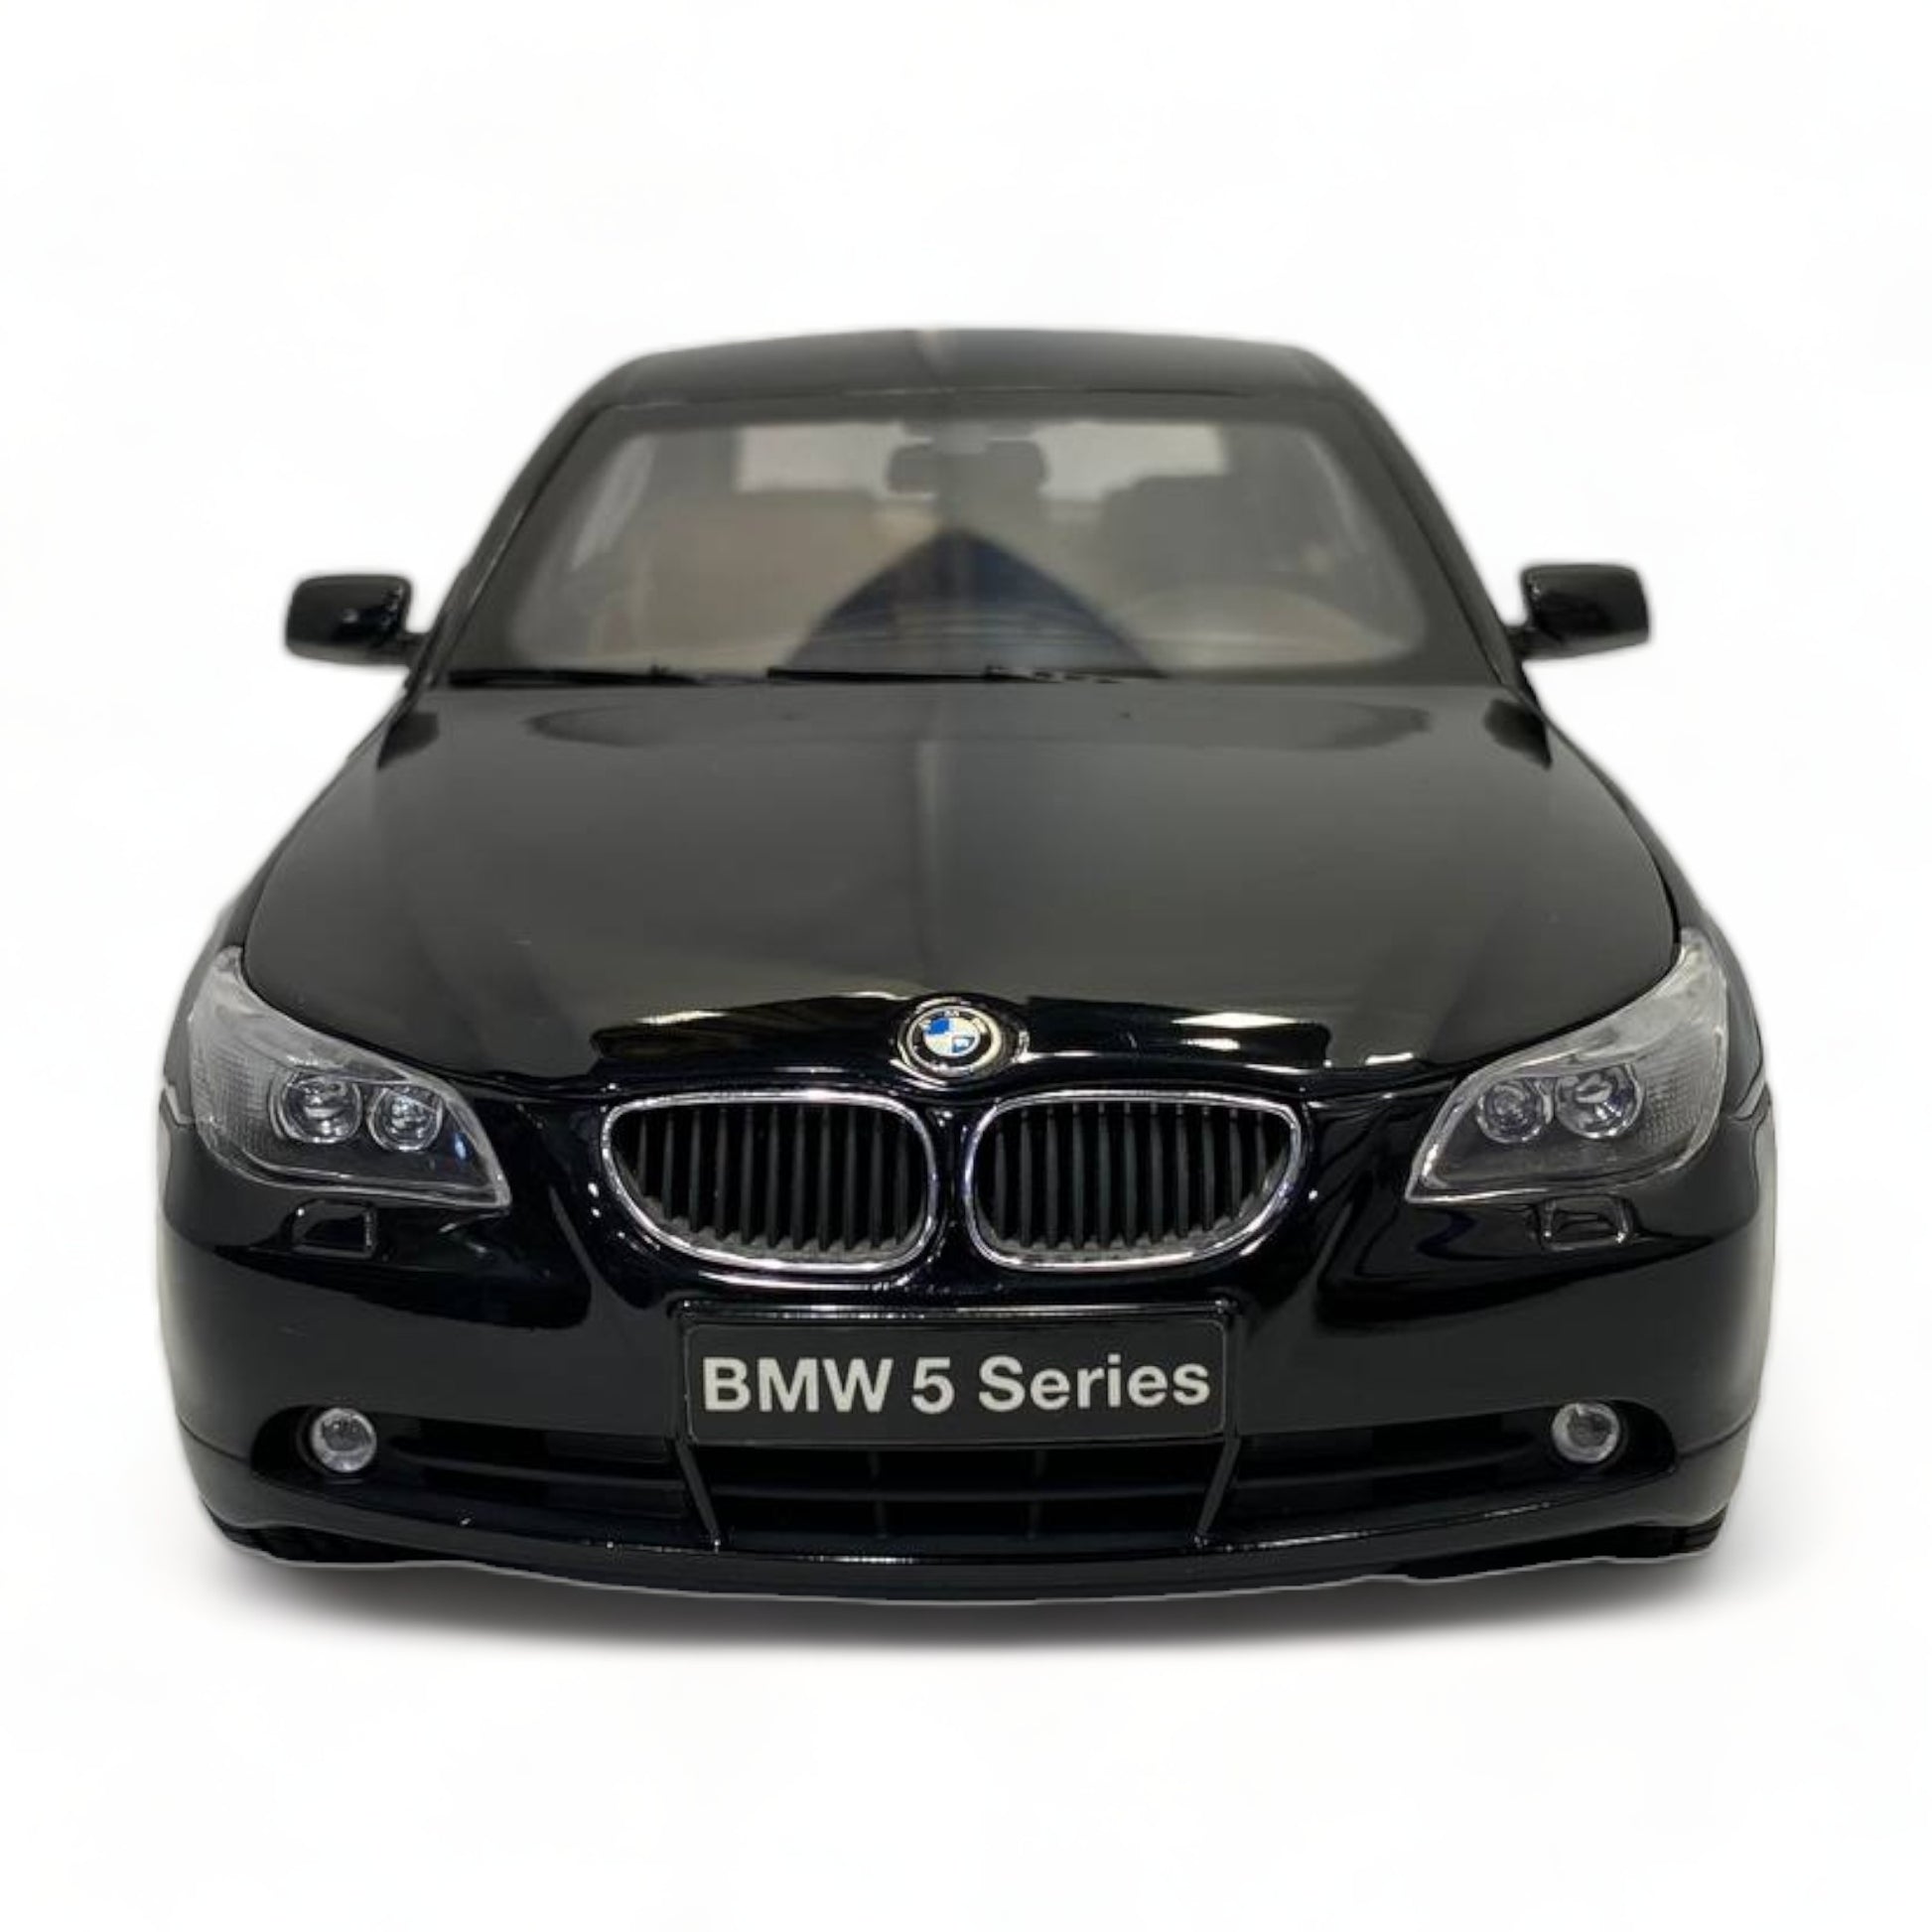 1/18 metal diecast full opening  Kyosho BMW 5 Series  Black Model Car|Sold in Dturman.com Dubai UAE.